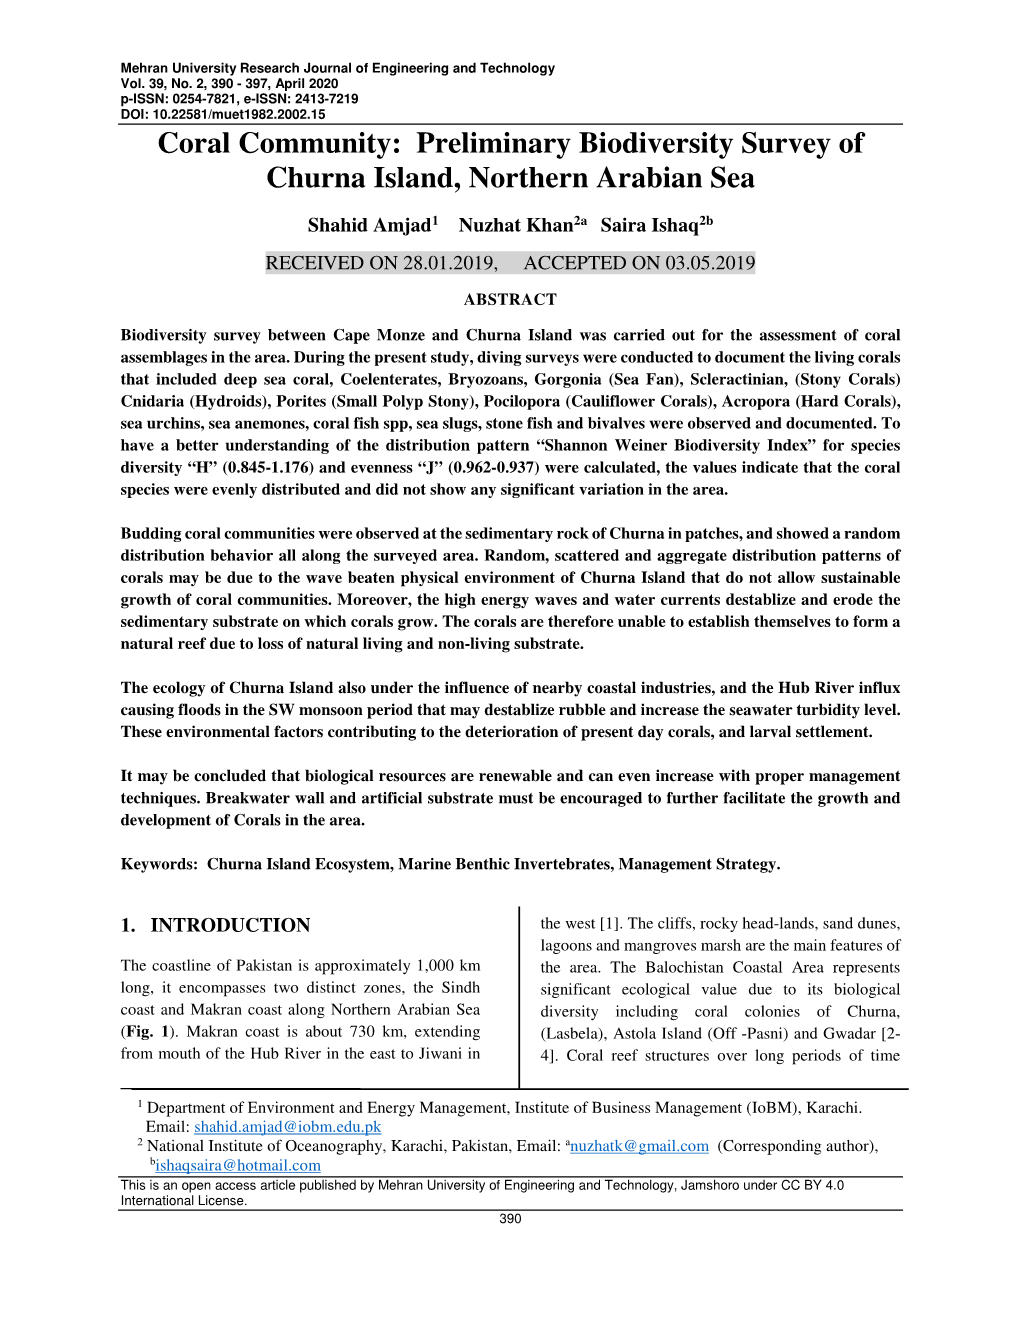 Preliminary Biodiversity Survey of Churna Island, Northern Arabian Sea